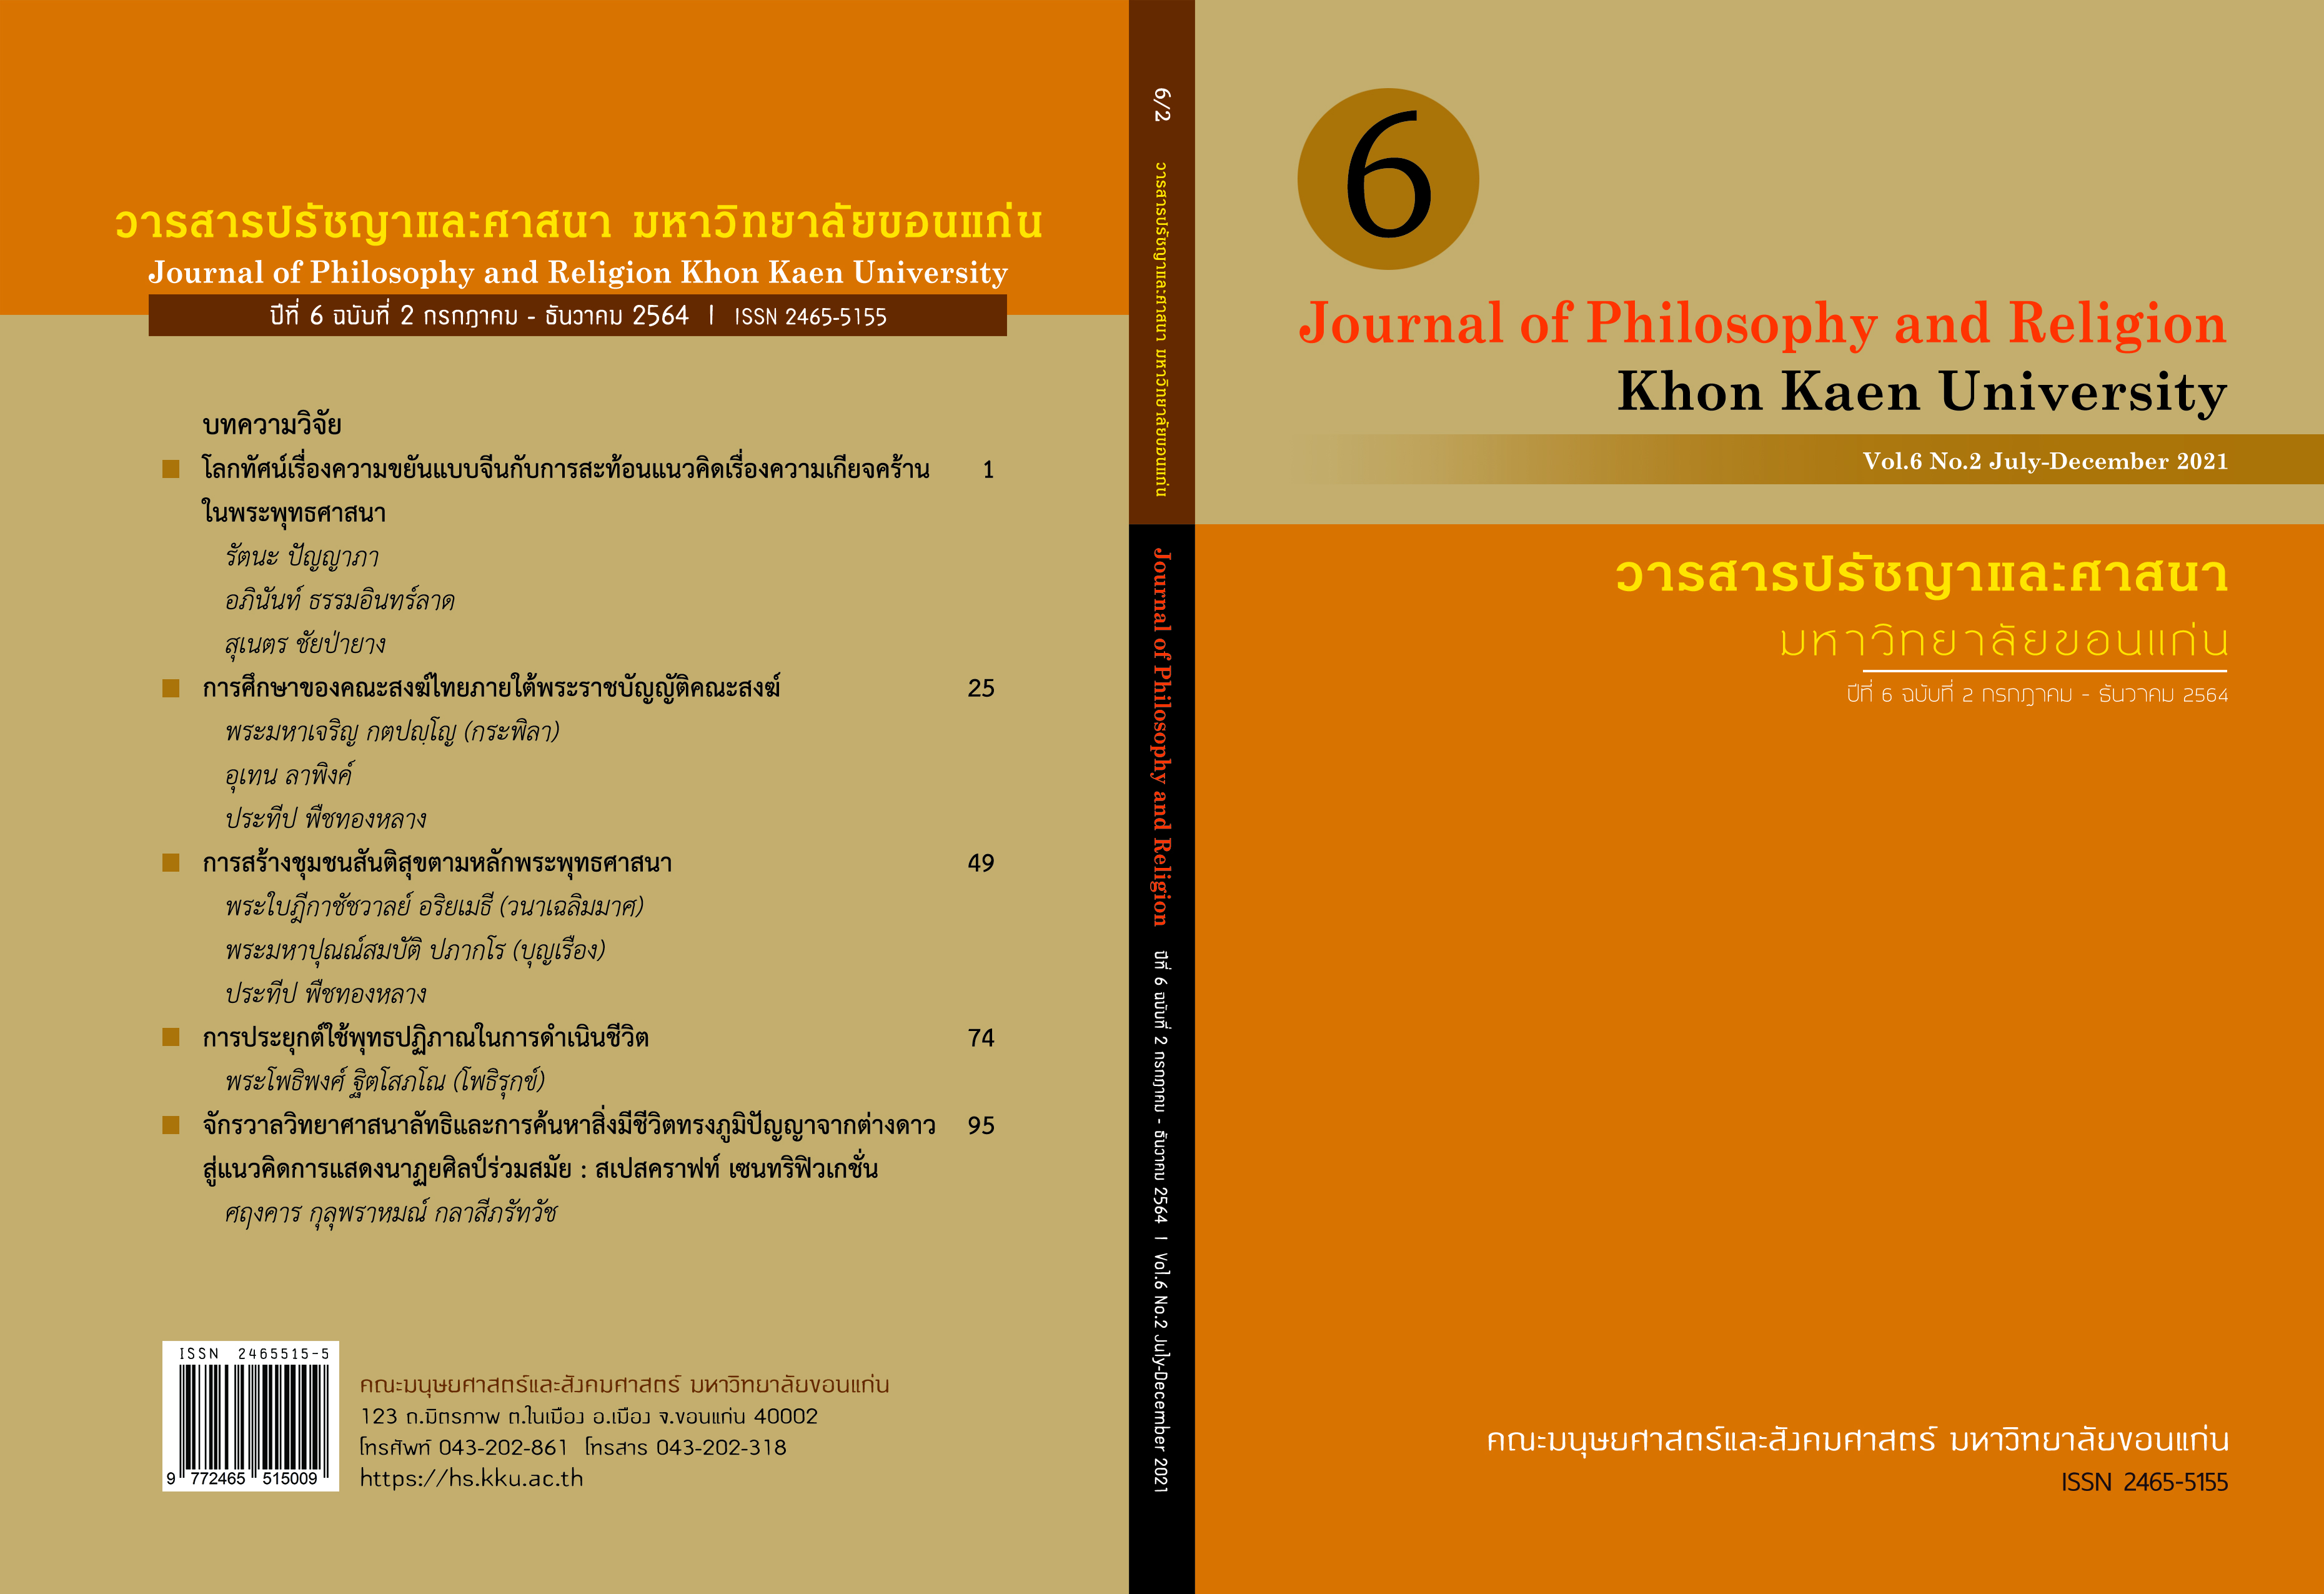 Vol. 6 No. 2 (2021): Journal of Philosophy and Religion, Khon Kaen University (July-December 2021)